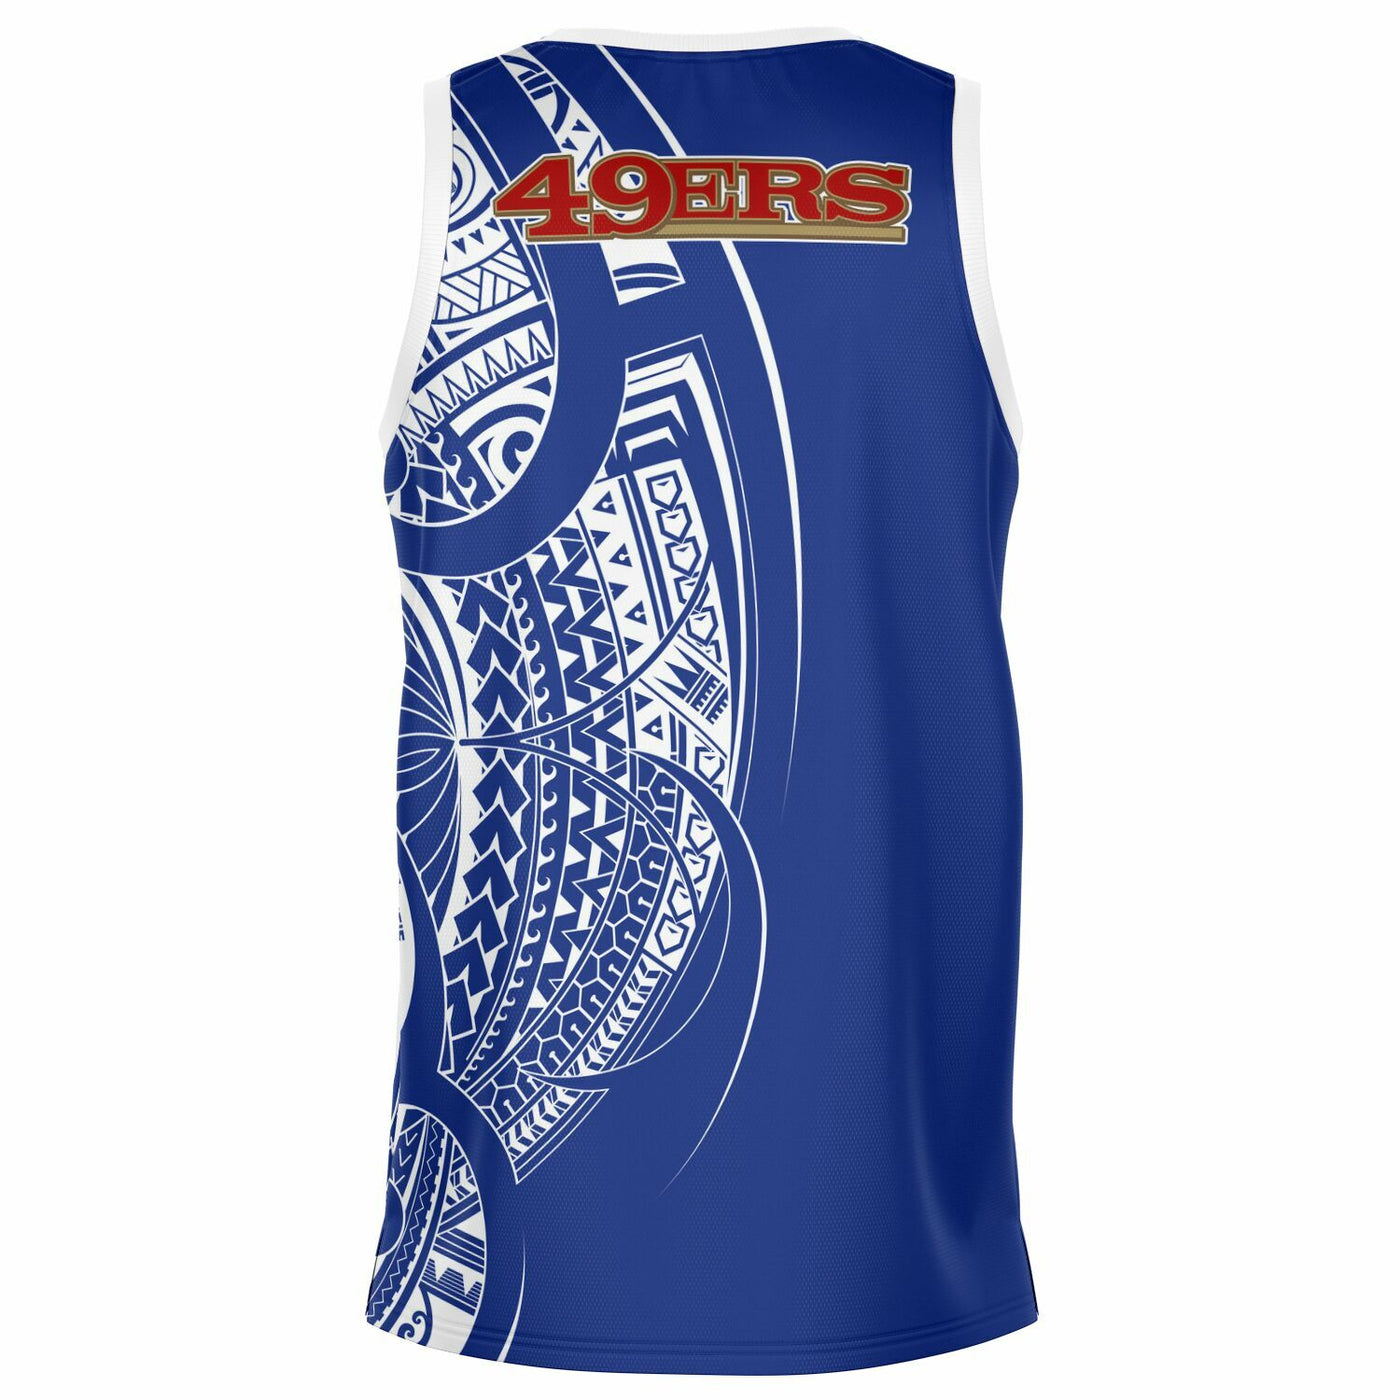 Buy Wholesale China Wholesale Custom Cheap Basketball Jerseys & Basketball  Jerseys at USD 3